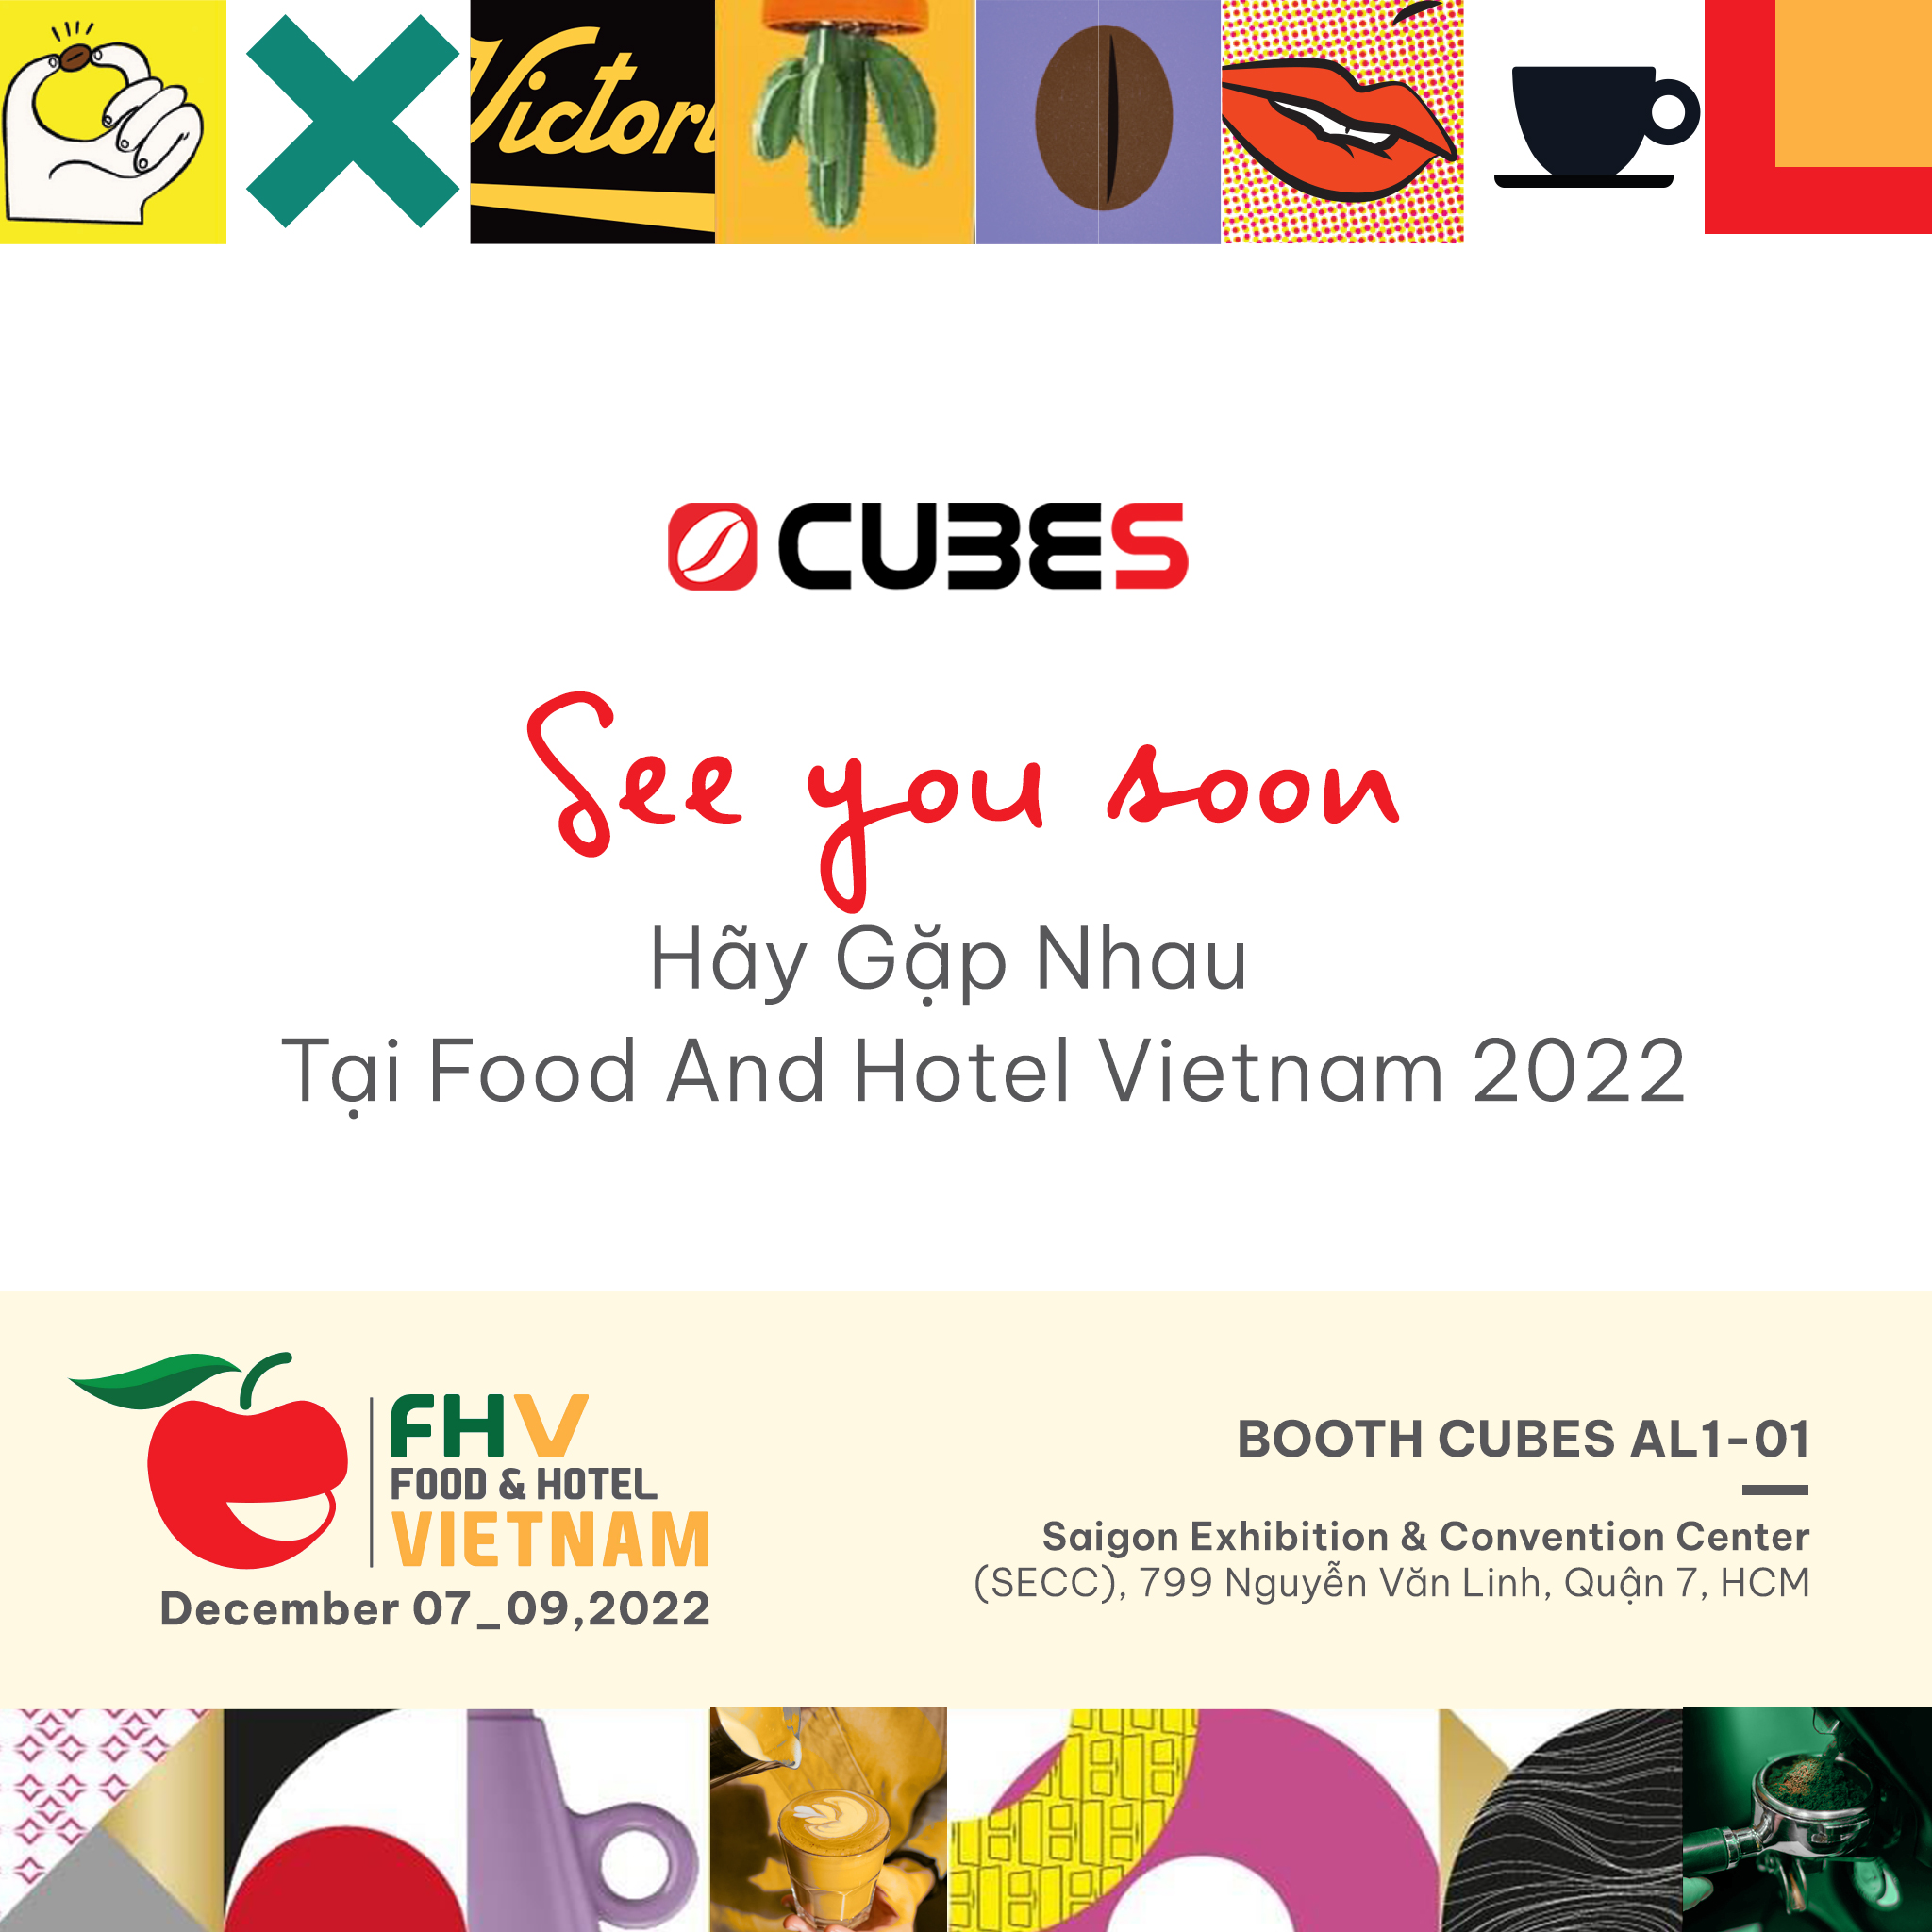 Cubes Asia tại triển lãm Food and Hotel Vietnam 2022